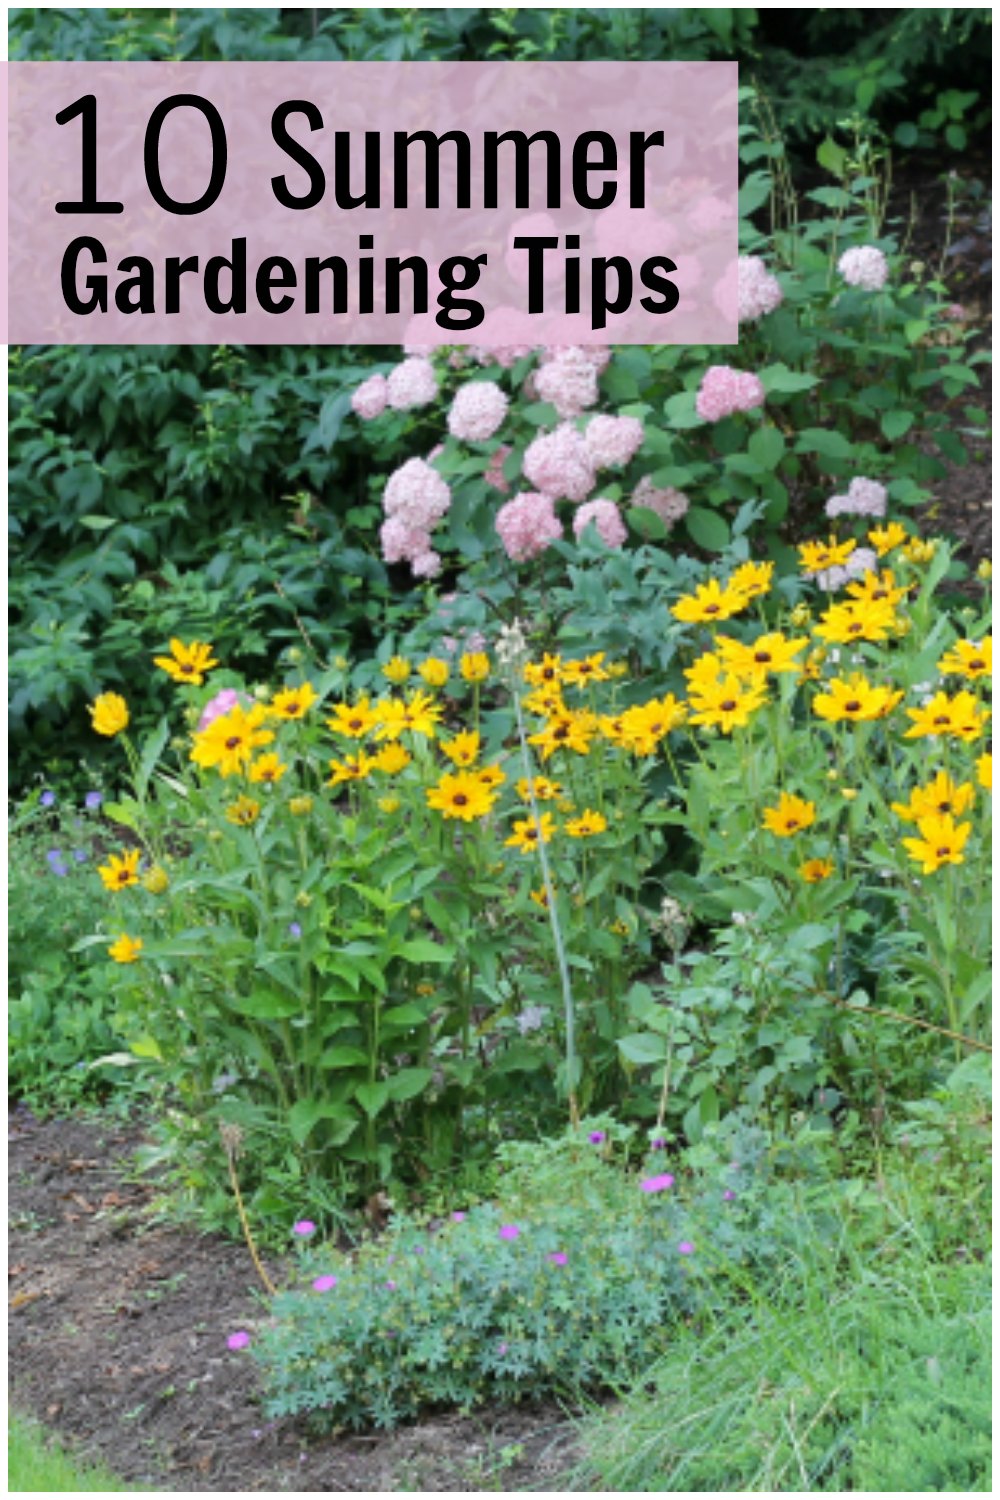 Flower garden with text overlay 10 summer gardening tips.